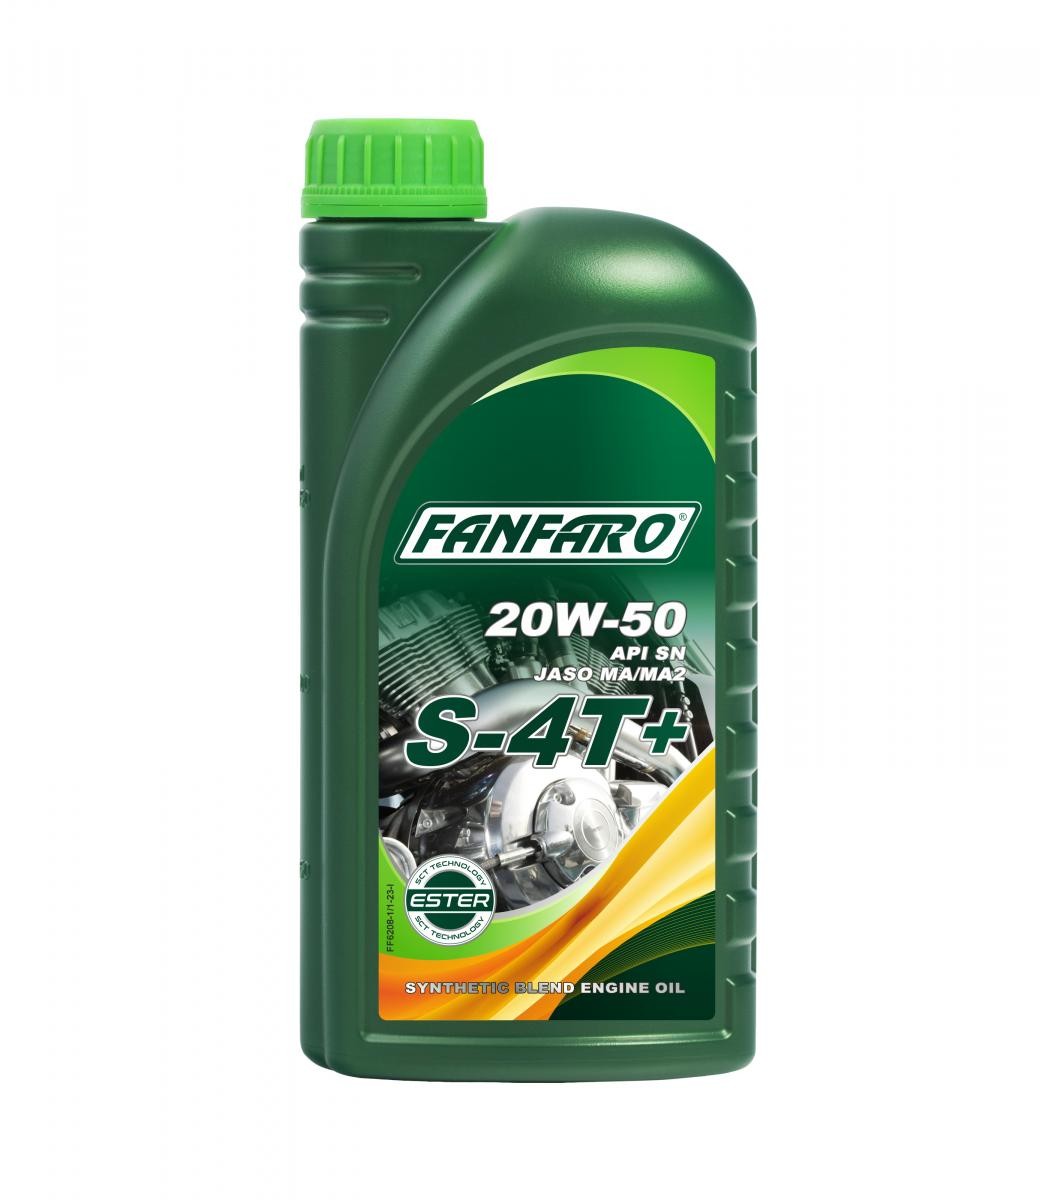 Auto oil FANFARO 20W-50, 1l longlife FF6208-1